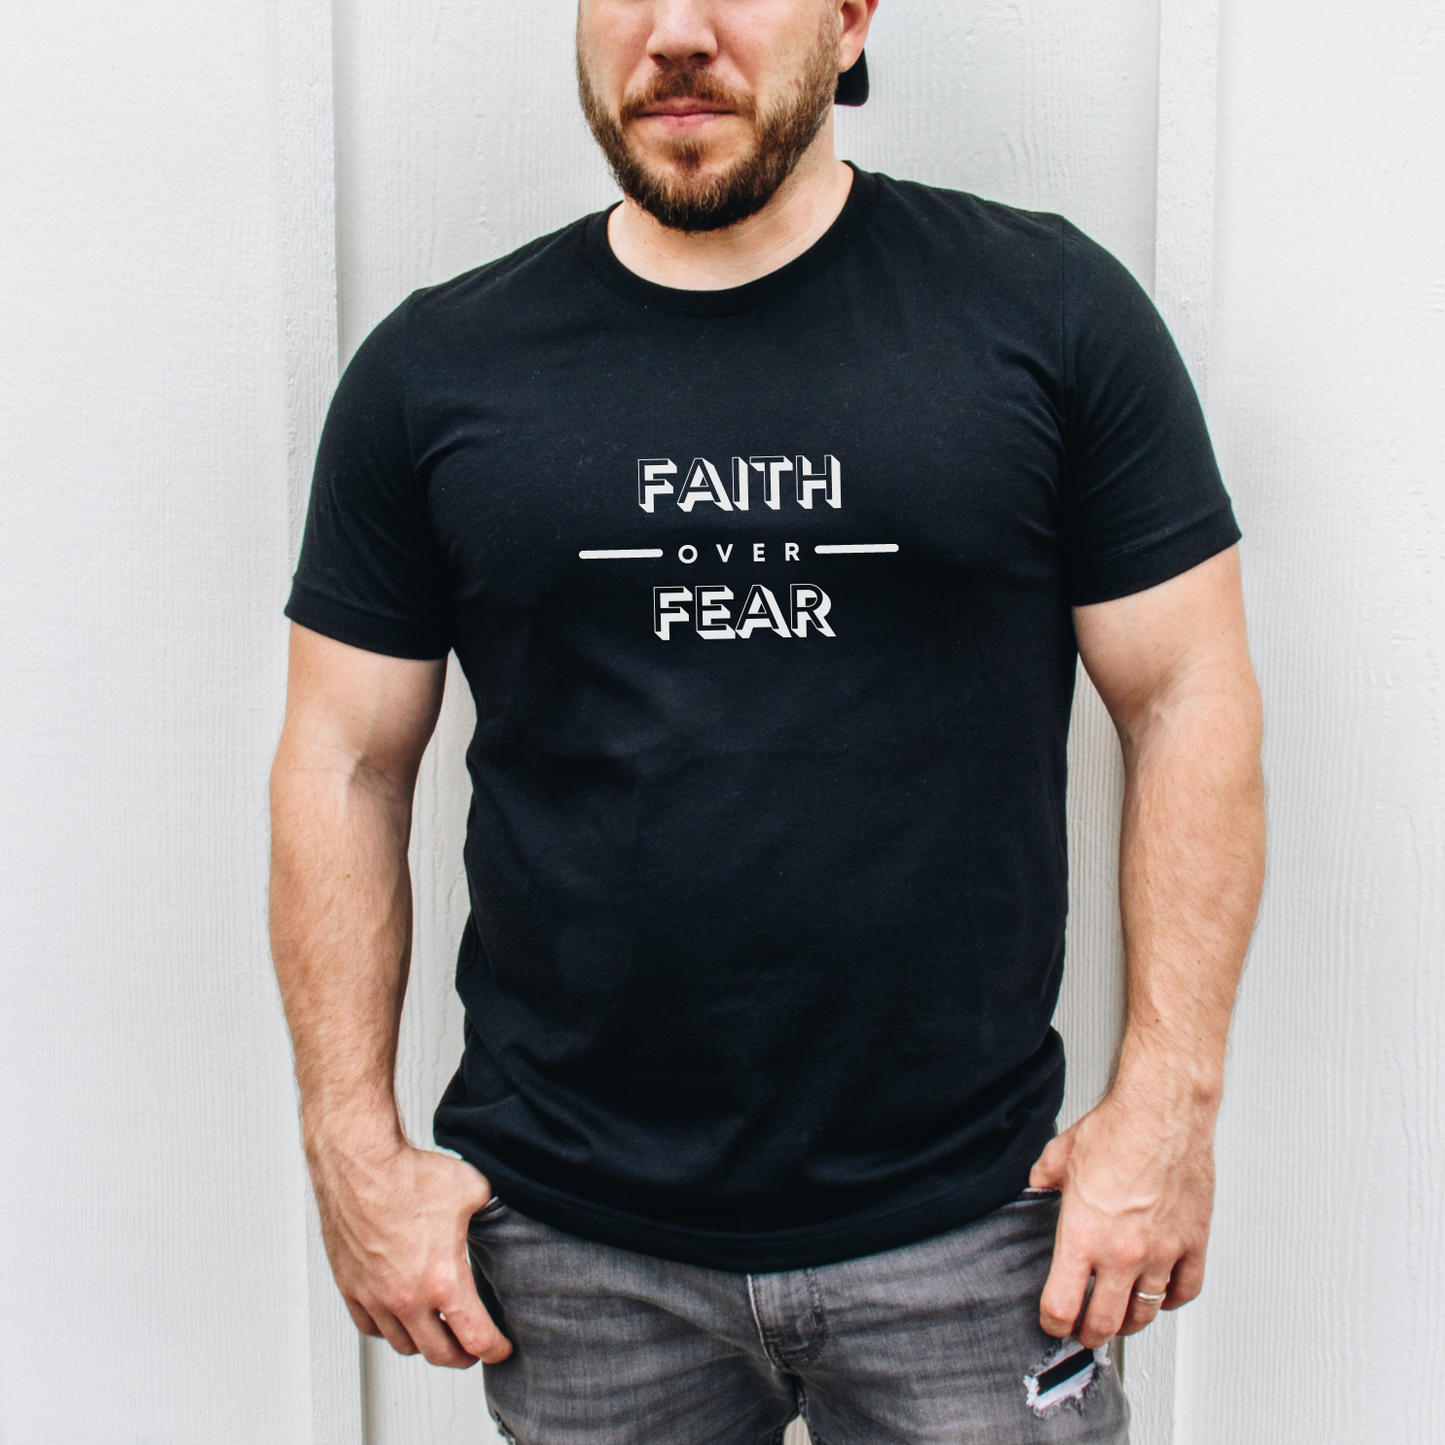 Camiseta unisex Fe sobre miedo